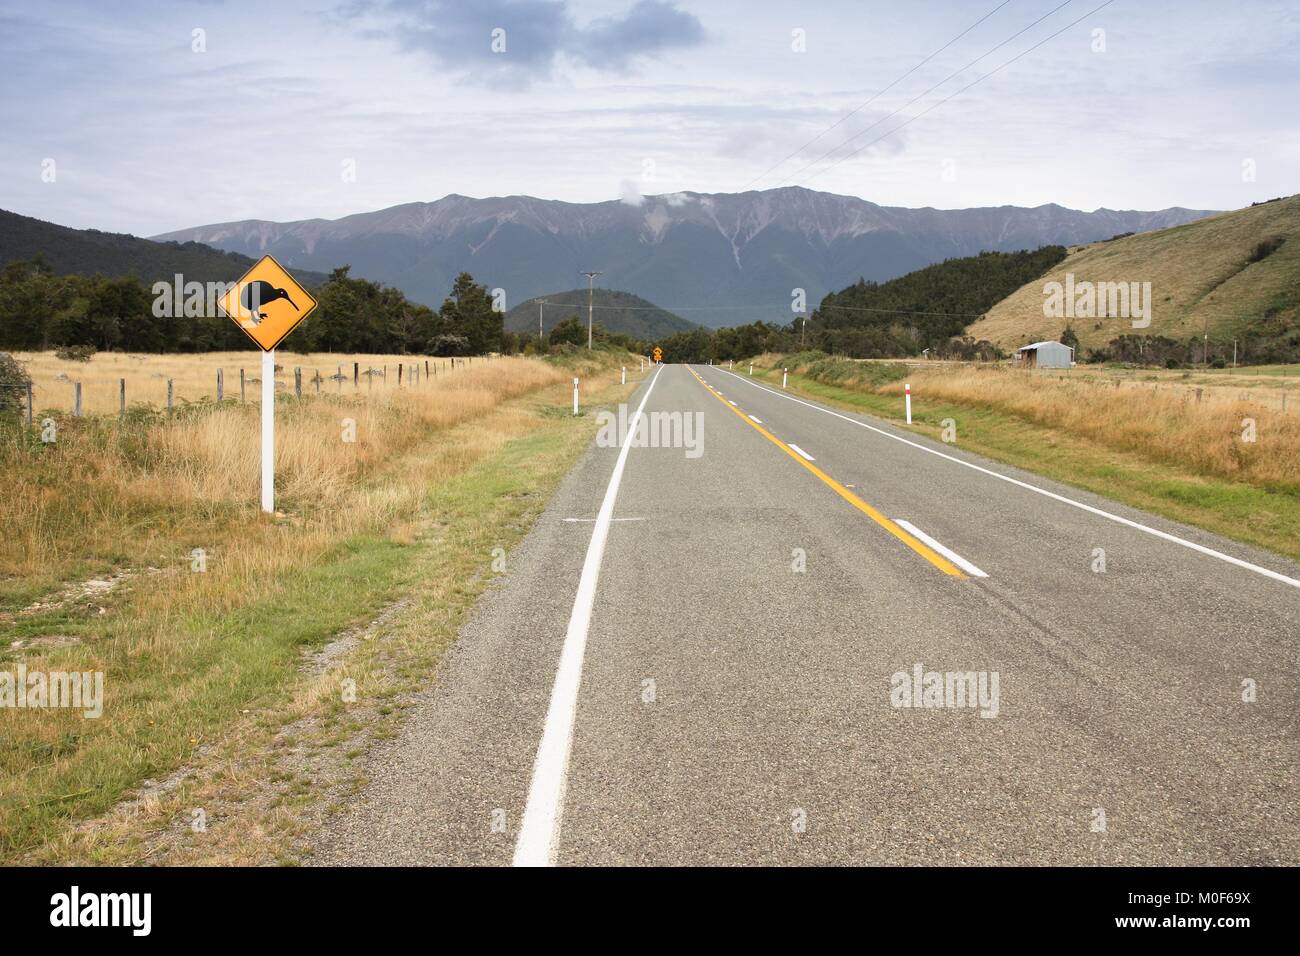 Nuova Zelanda simbolo - kiwi cartello segnaletico. Regione Tasmania road. Foto Stock